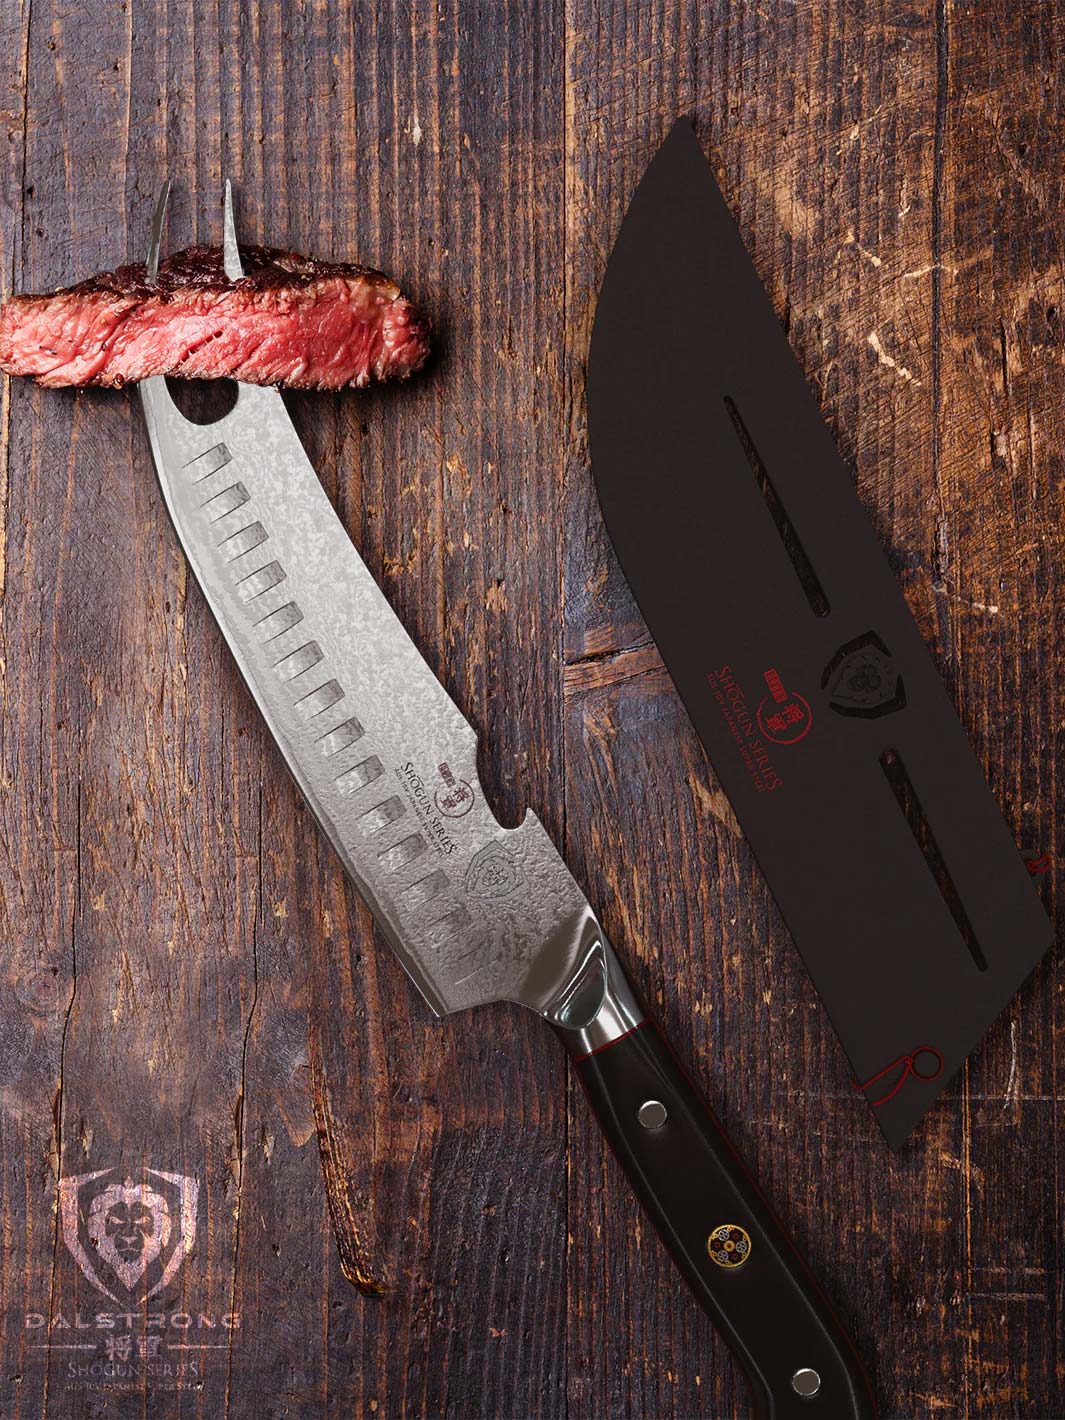 Dalstrong - Pitmaster BBQ & Meat Knife - 8 inch - Shogun Series - Forked Tip & Bottle Opener - Japanese AUS-10V Super Steel - w/Sheath